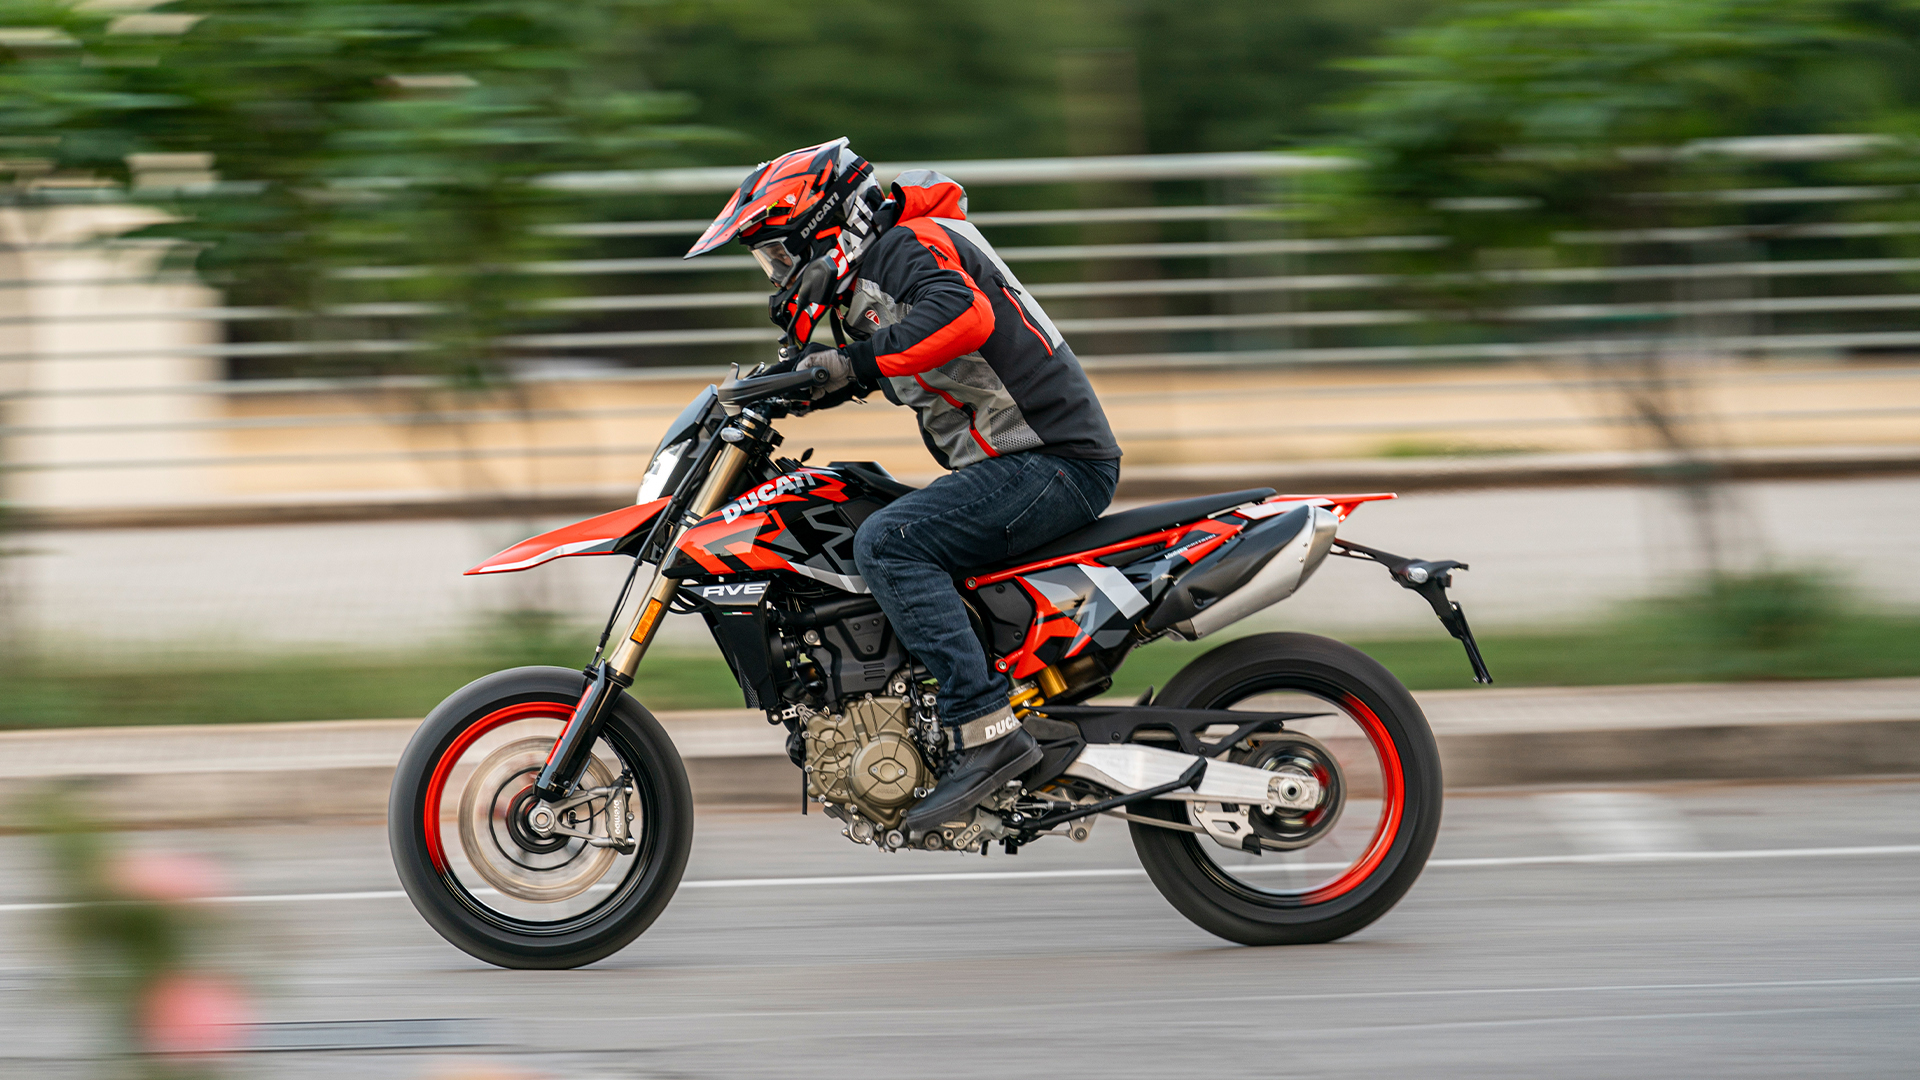 Ducati Hypermotard launch in India